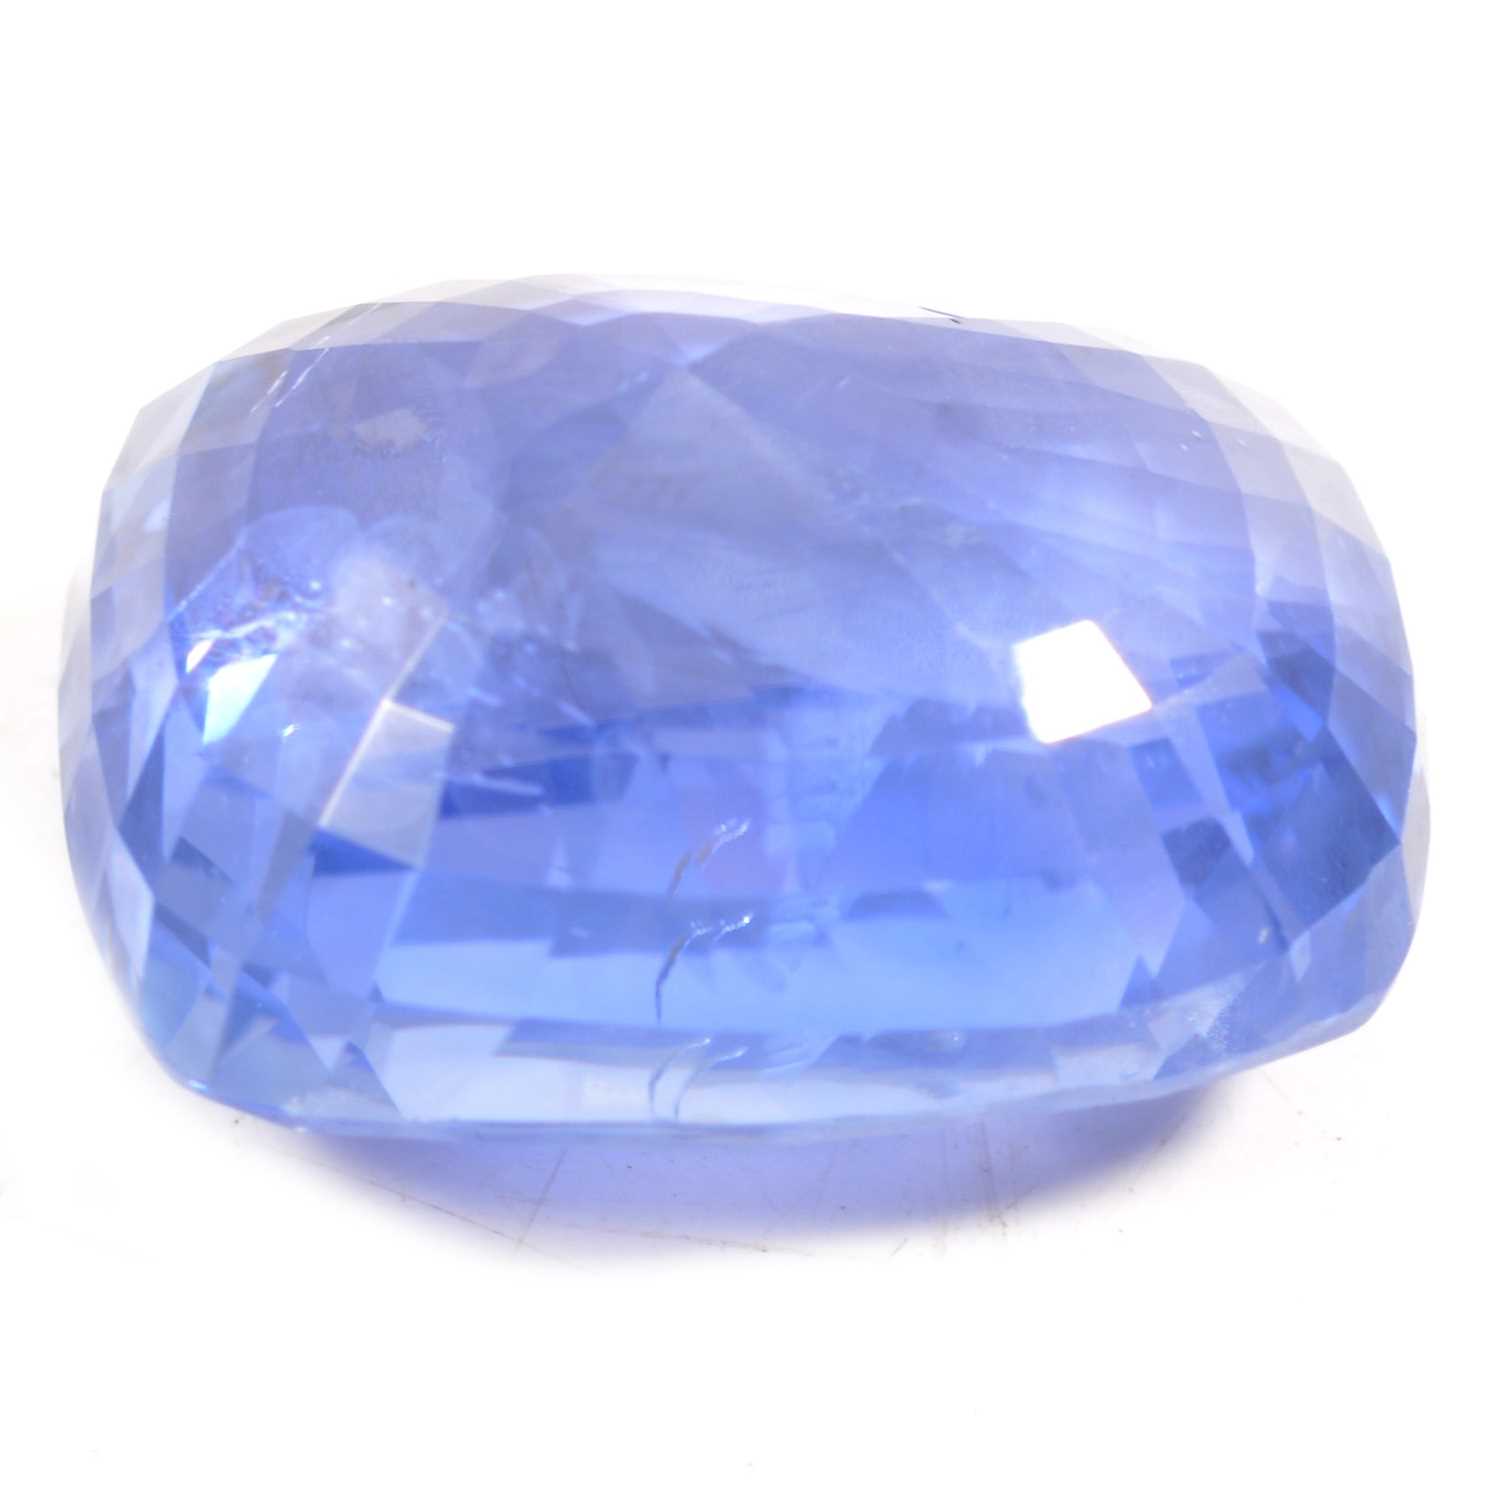 A loose blue sapphire stone - 12.25 carats.